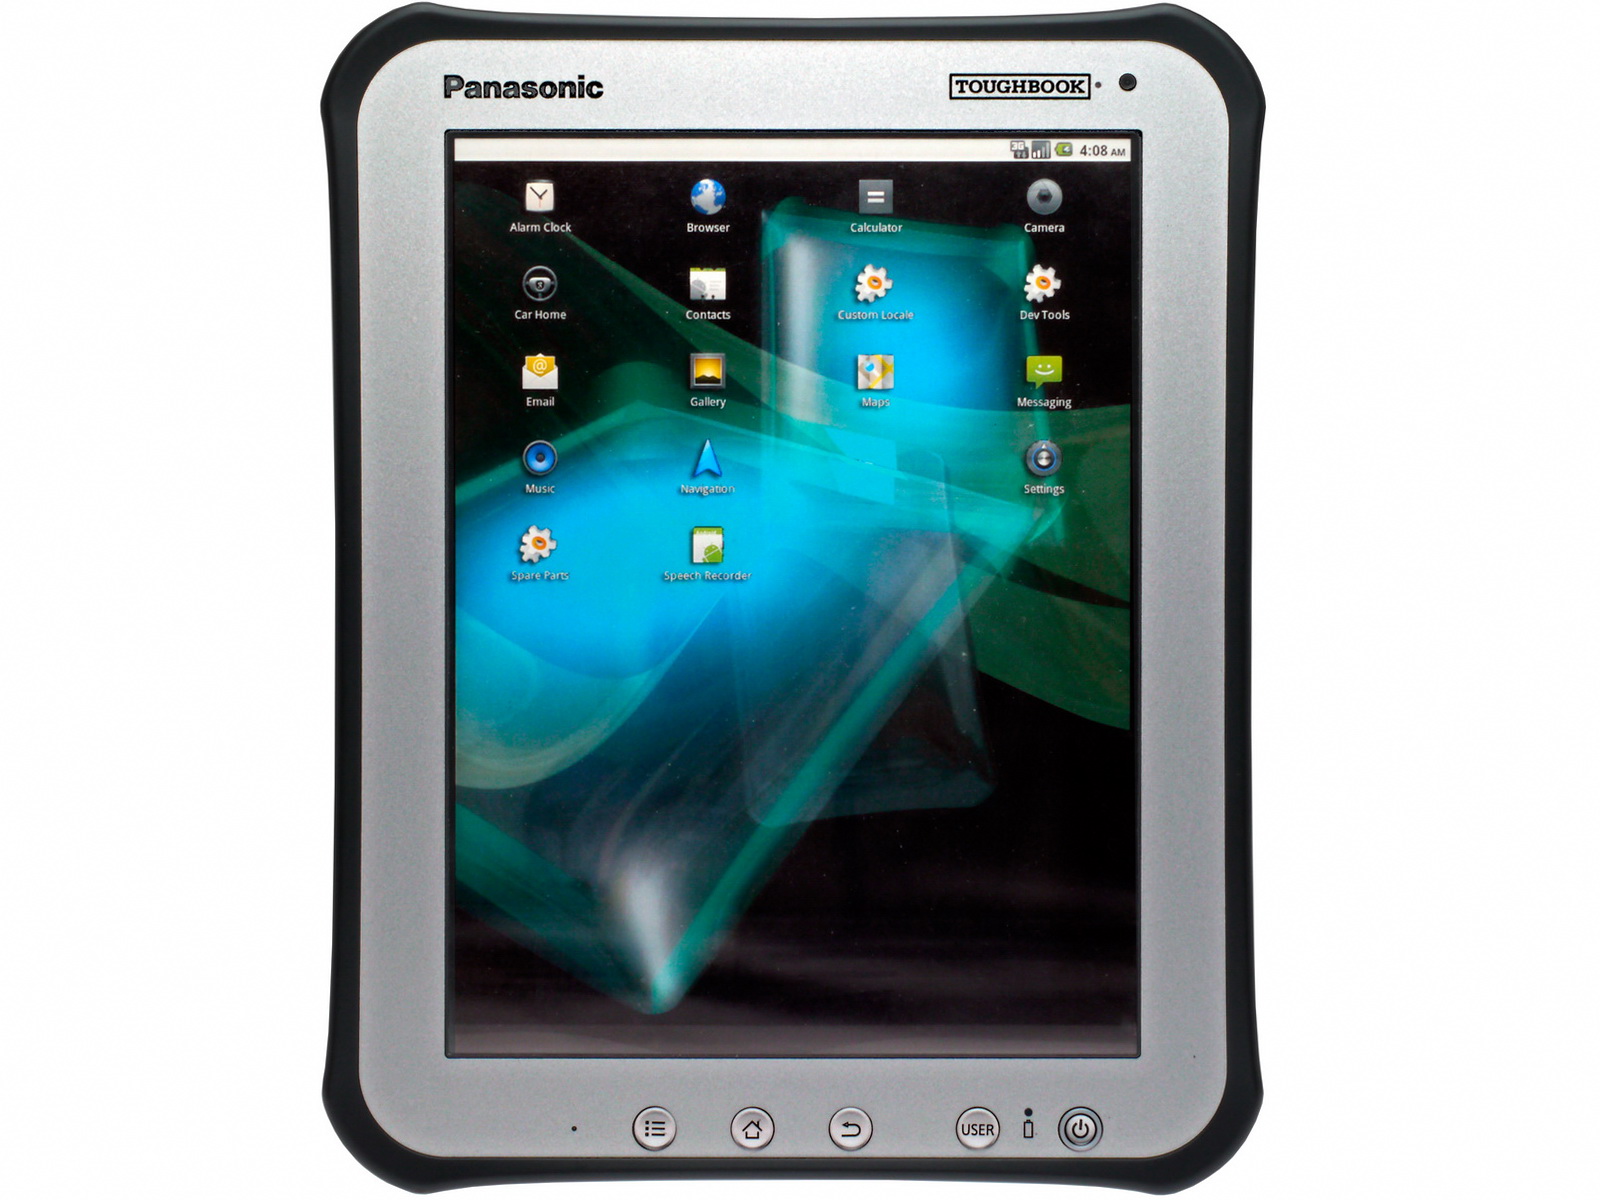 Toughbook планшет. Panasonic Toughbook планшет. Неубиваемый планшет. Первый планшет андроид.